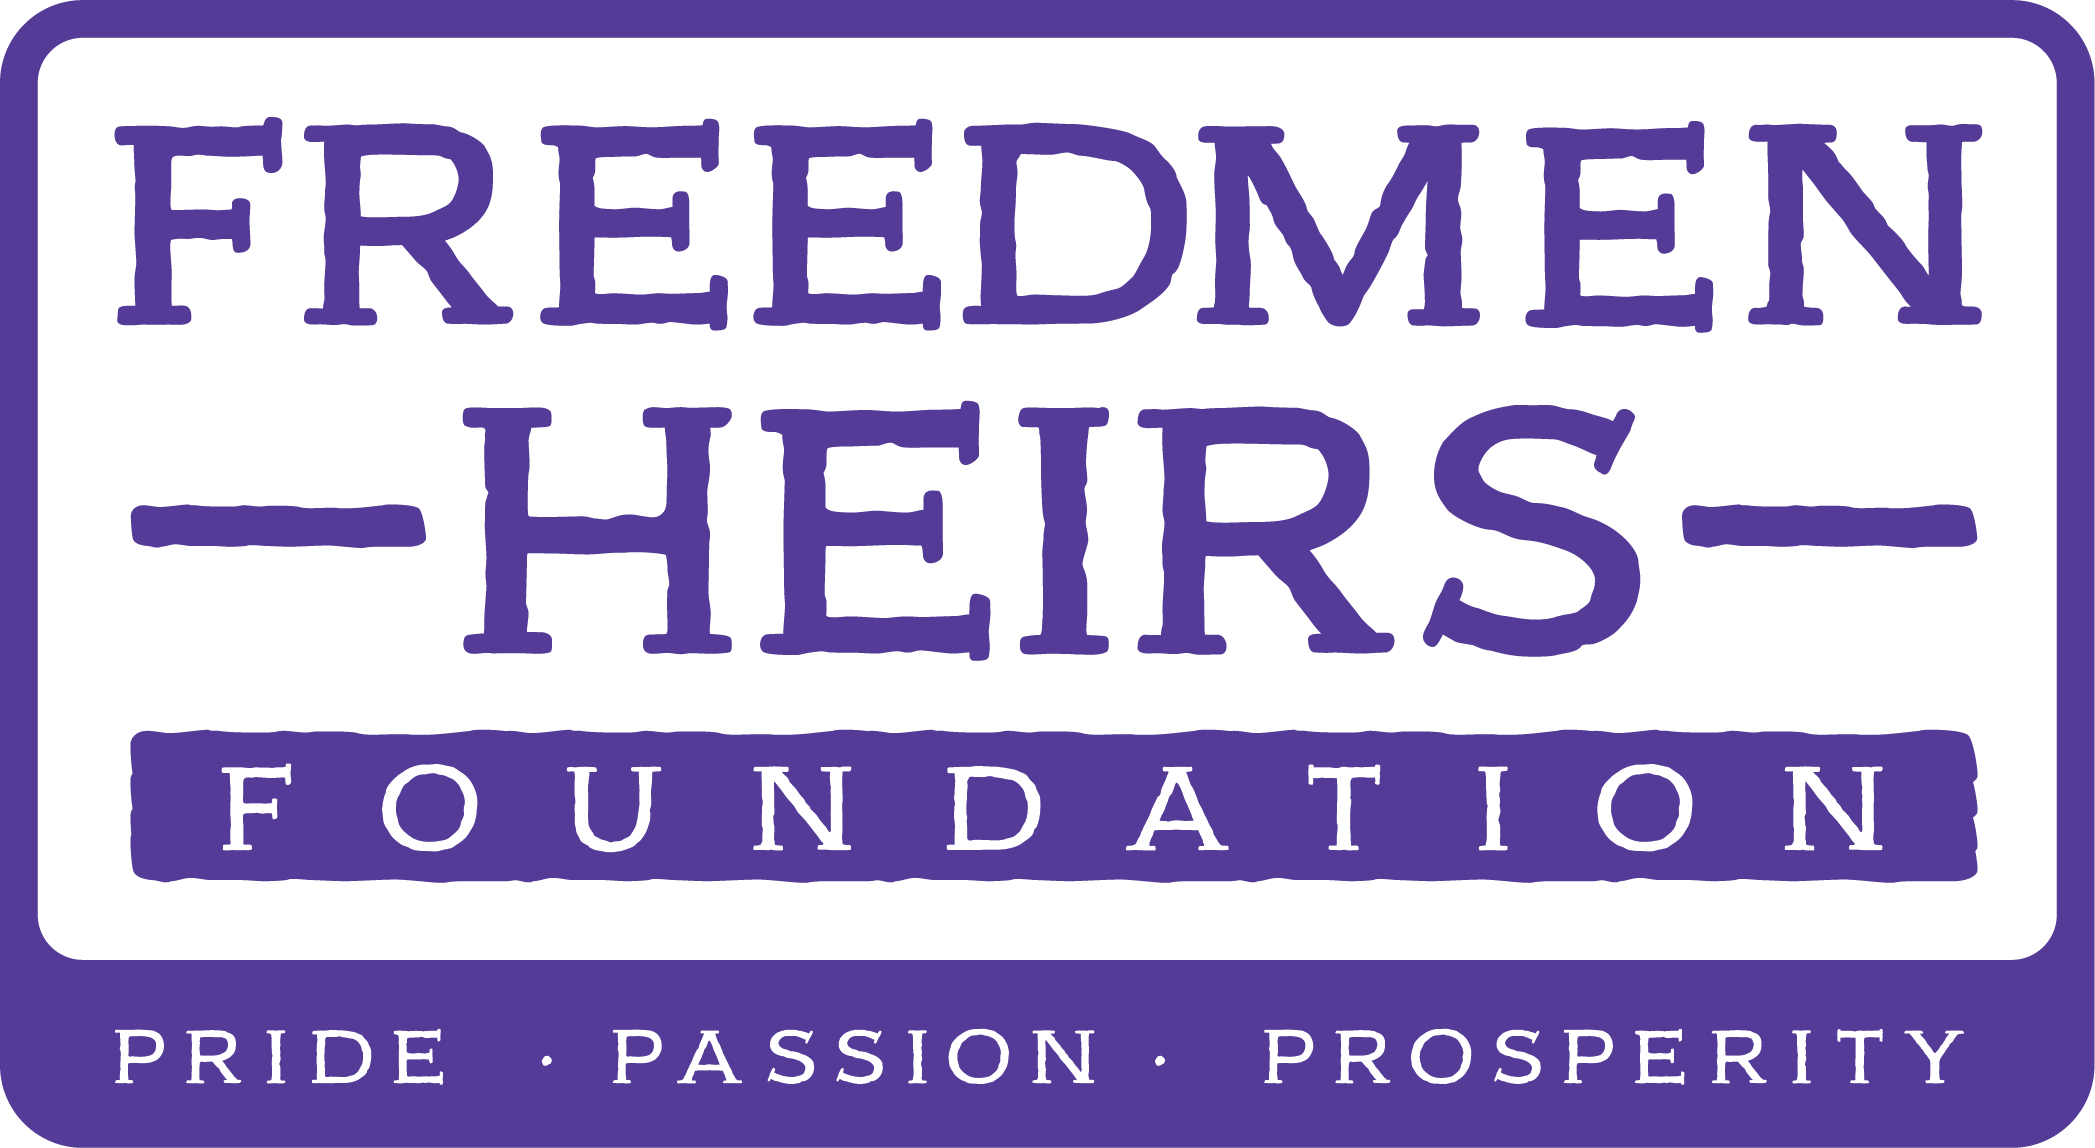 Freedmen Heirs Foundation